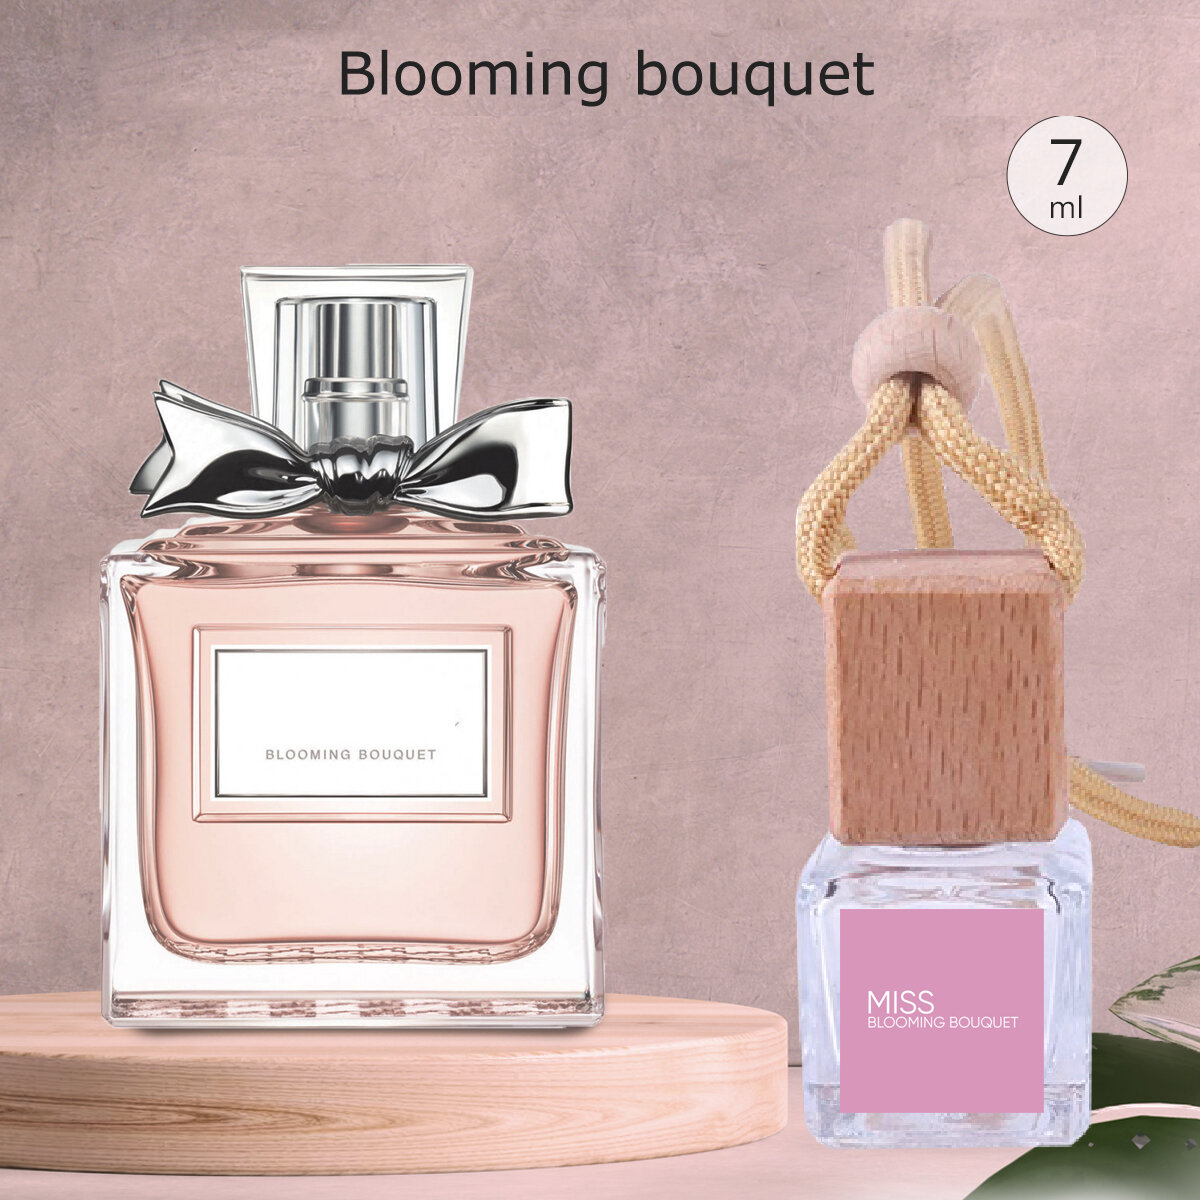 Gratus Parfum Miss Blooming Bouquet Автопарфюм 7 мл / Ароматизатор для автомобиля и дома